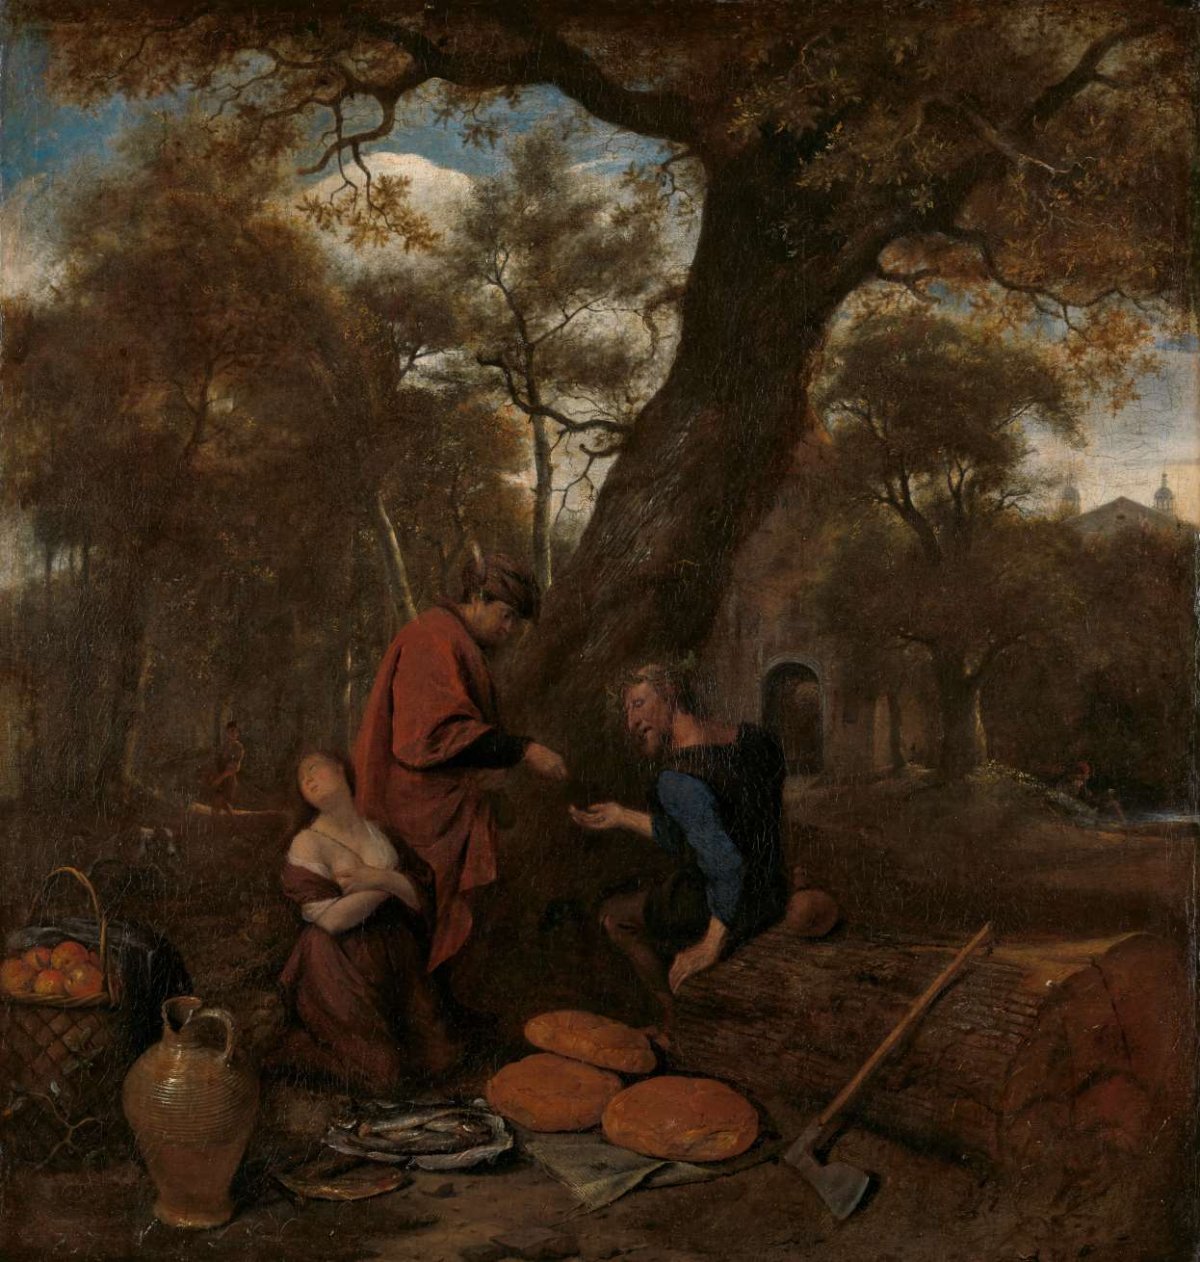 Erysichthon selling his daughter, Jan Havicksz. Steen, 1650 - 1660